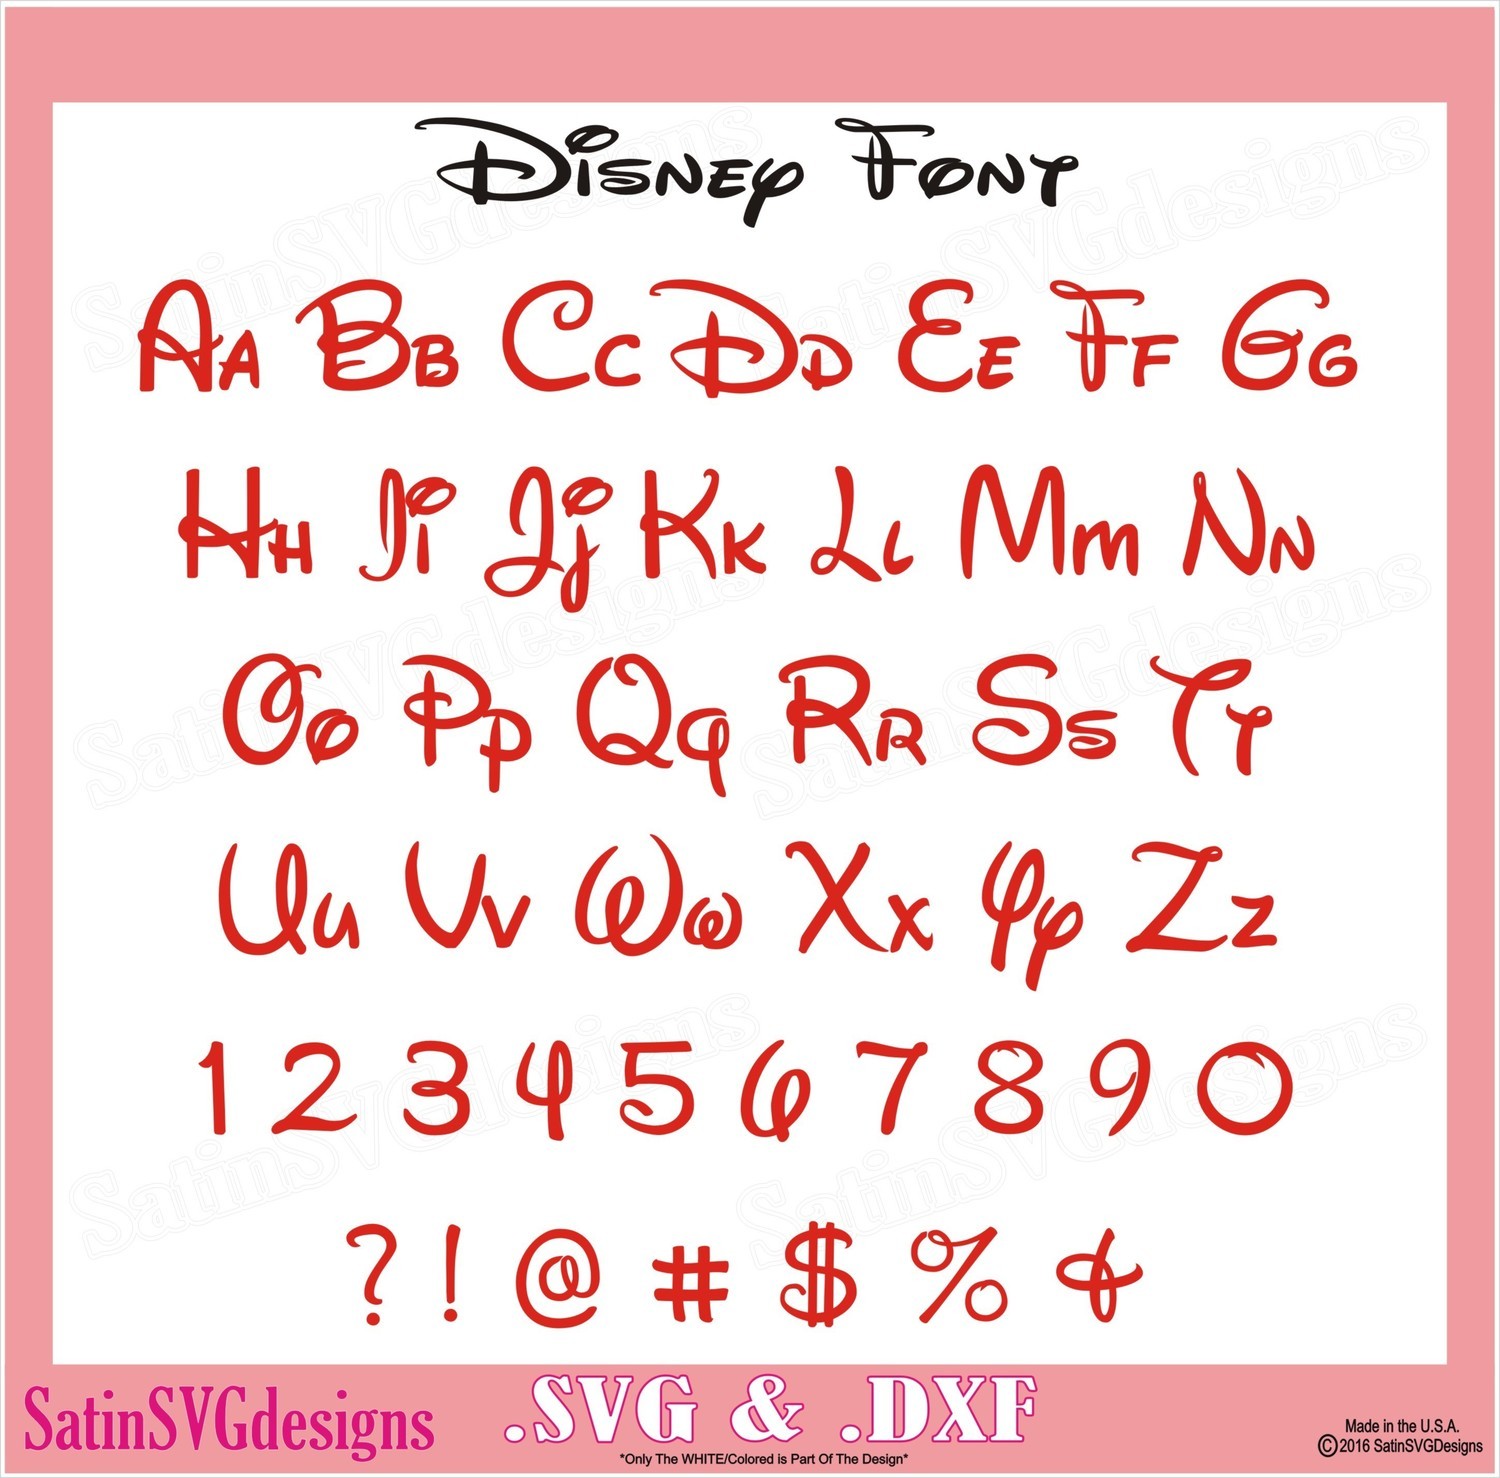 Disney Font Waltography Design SVG Files, Cricut, Silhouette Studio